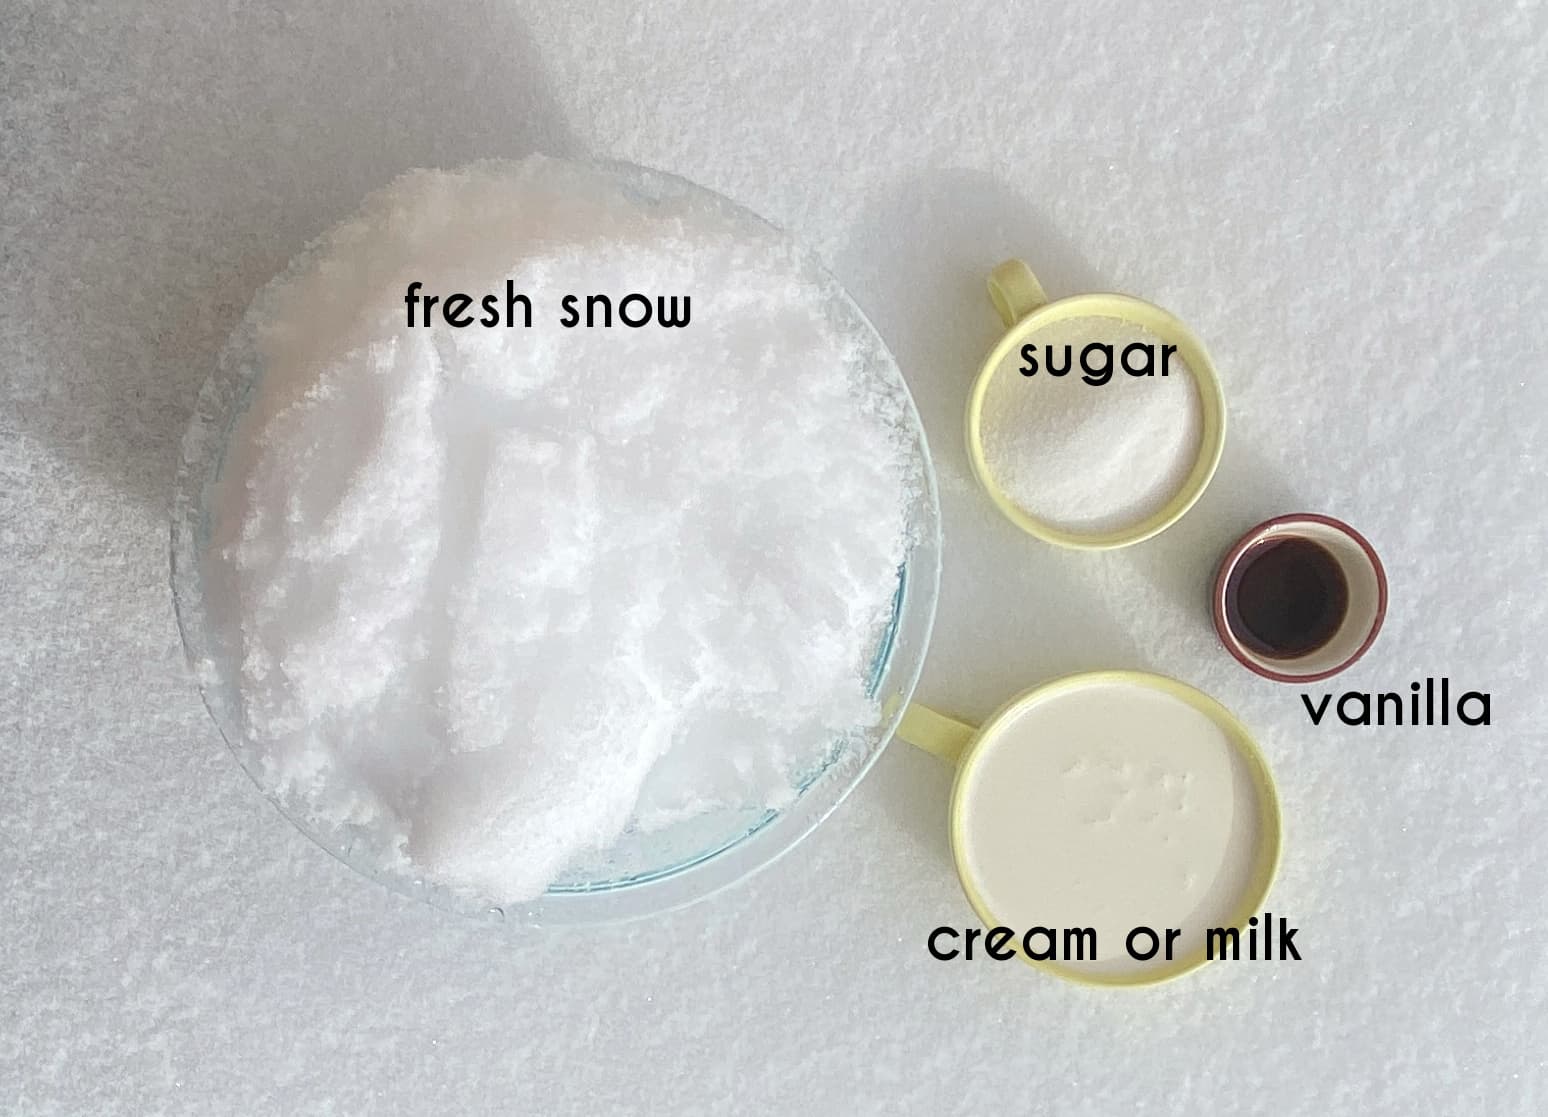 Snow ice cream ingredeints, labeled: fresh snow, cream, sugar, vanilla